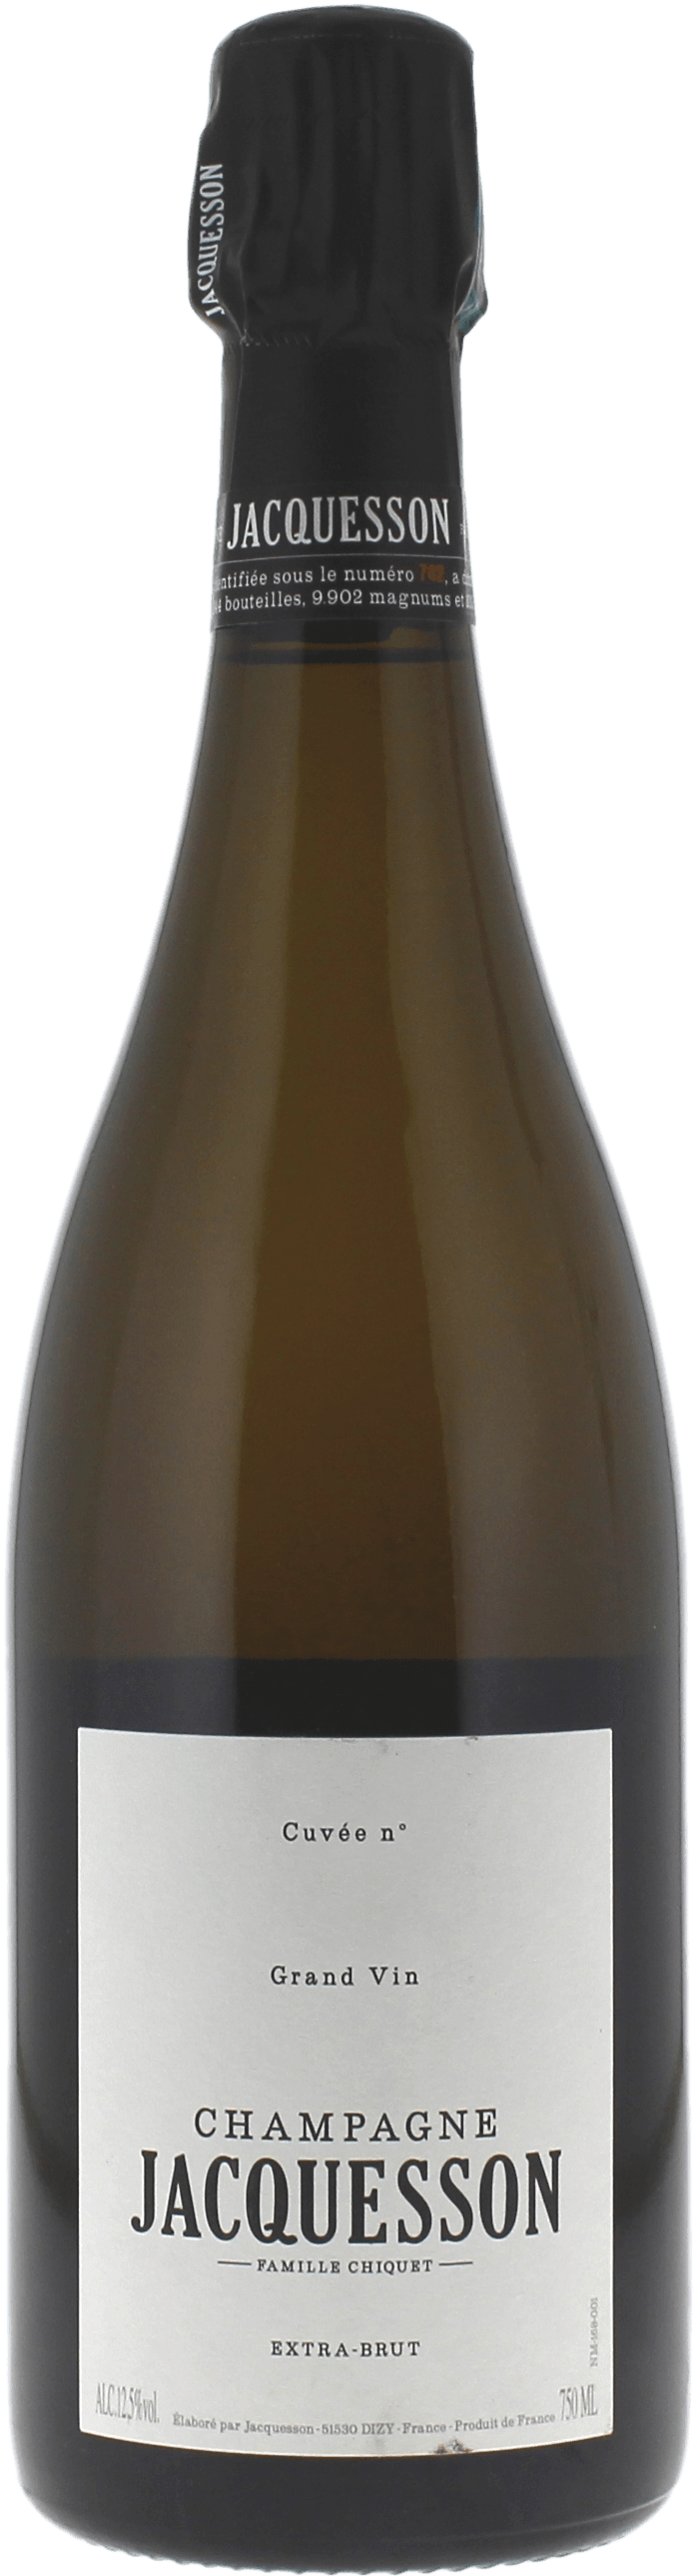 Jacquesson cuve 738 degorgement tardif  Jacquesson, Champagne